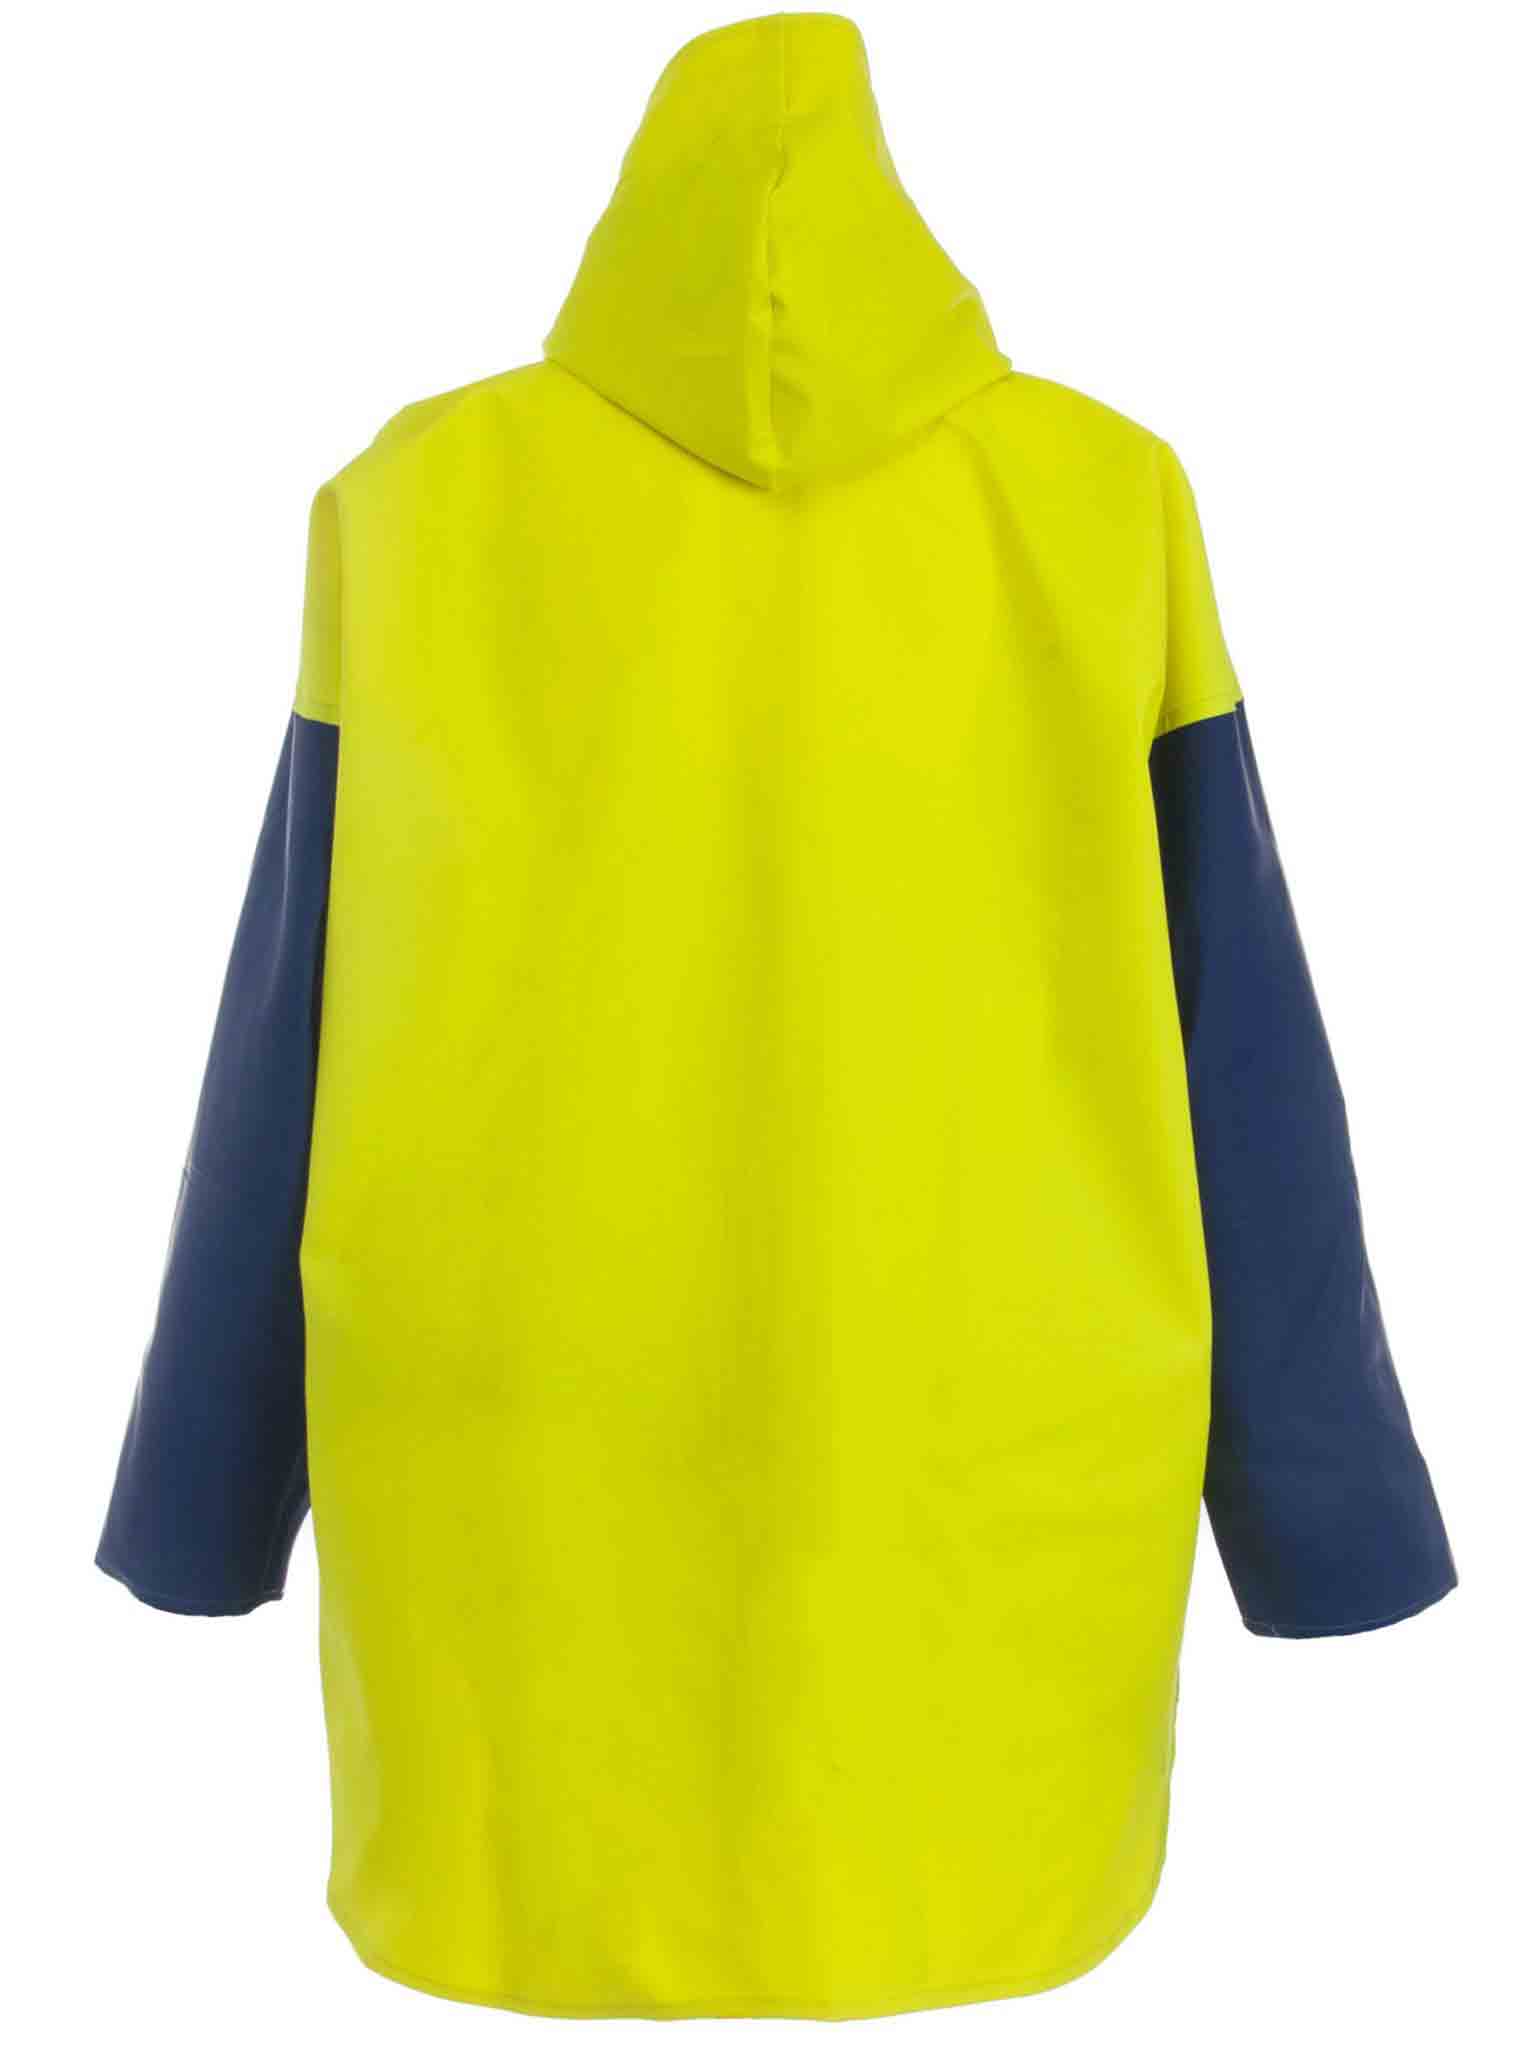 Pick Size Stormline Lightweight Commercial Fishing Rain Gear Jacket Free Ship* 